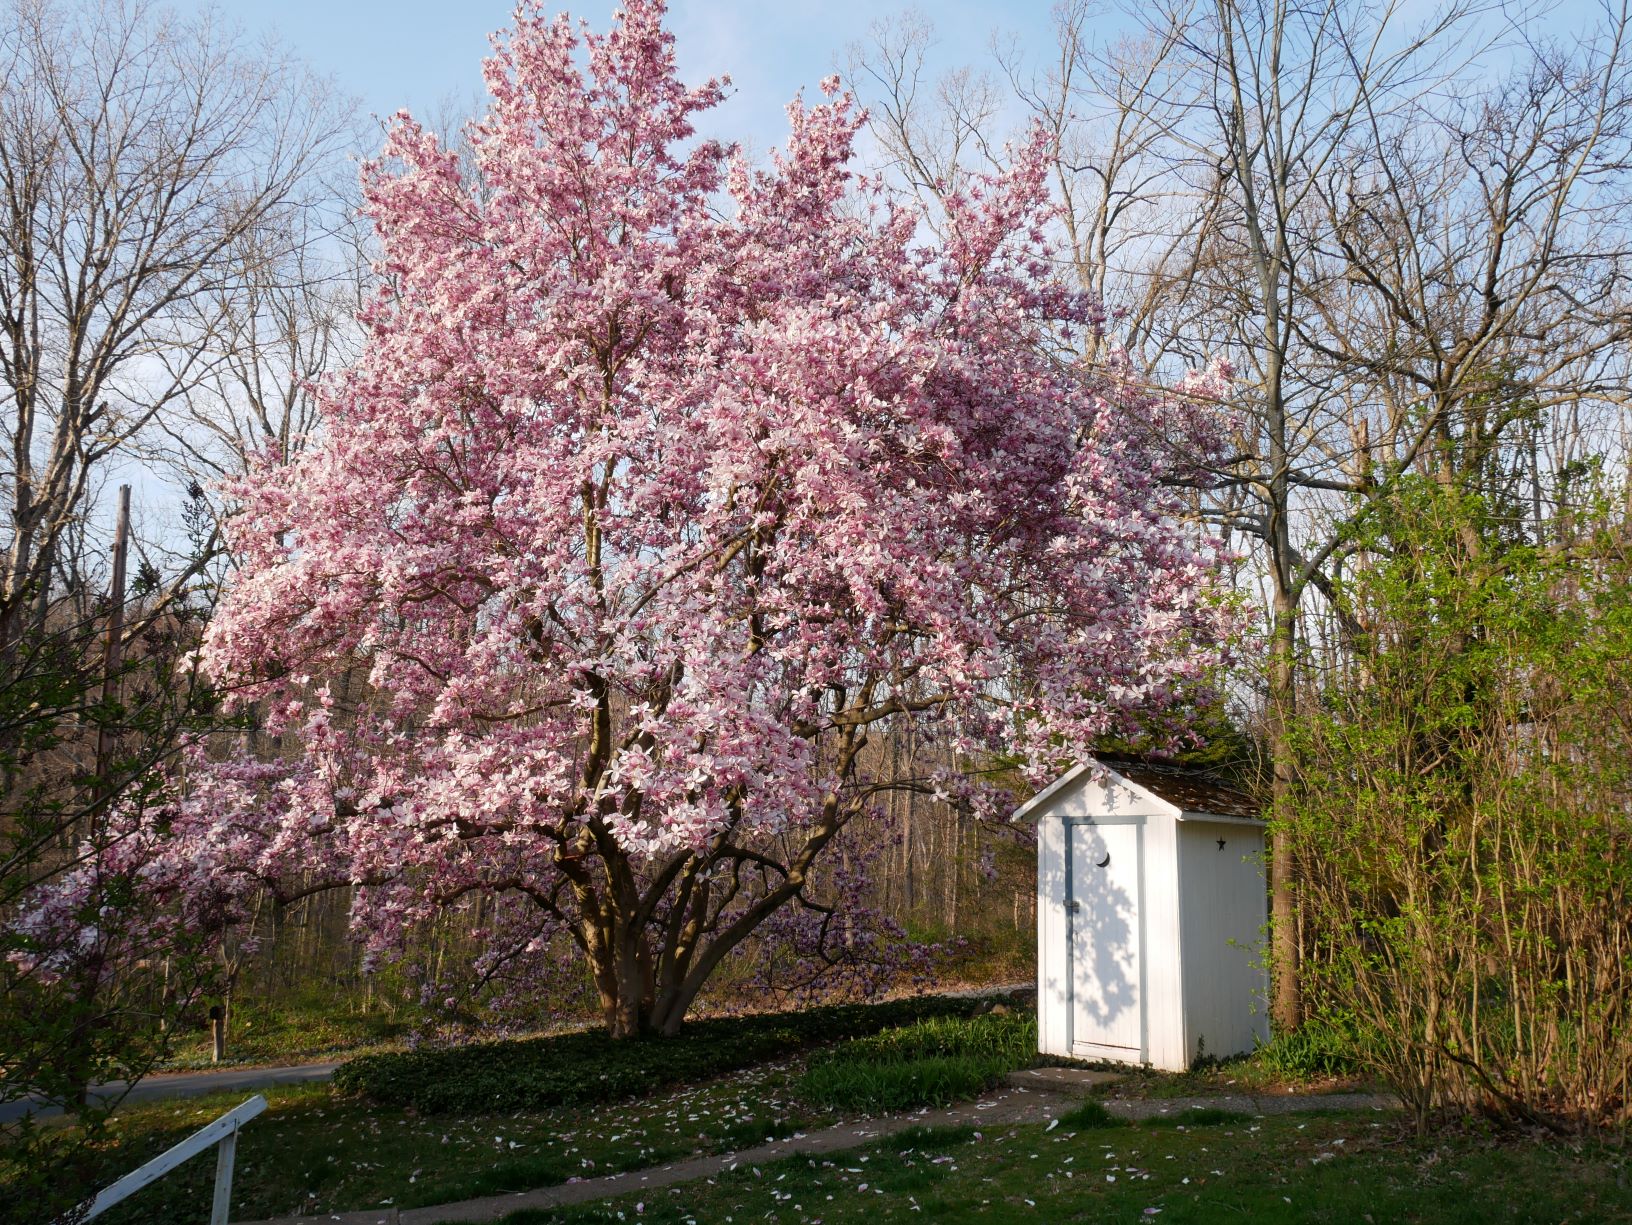 Finest magnolia gallery